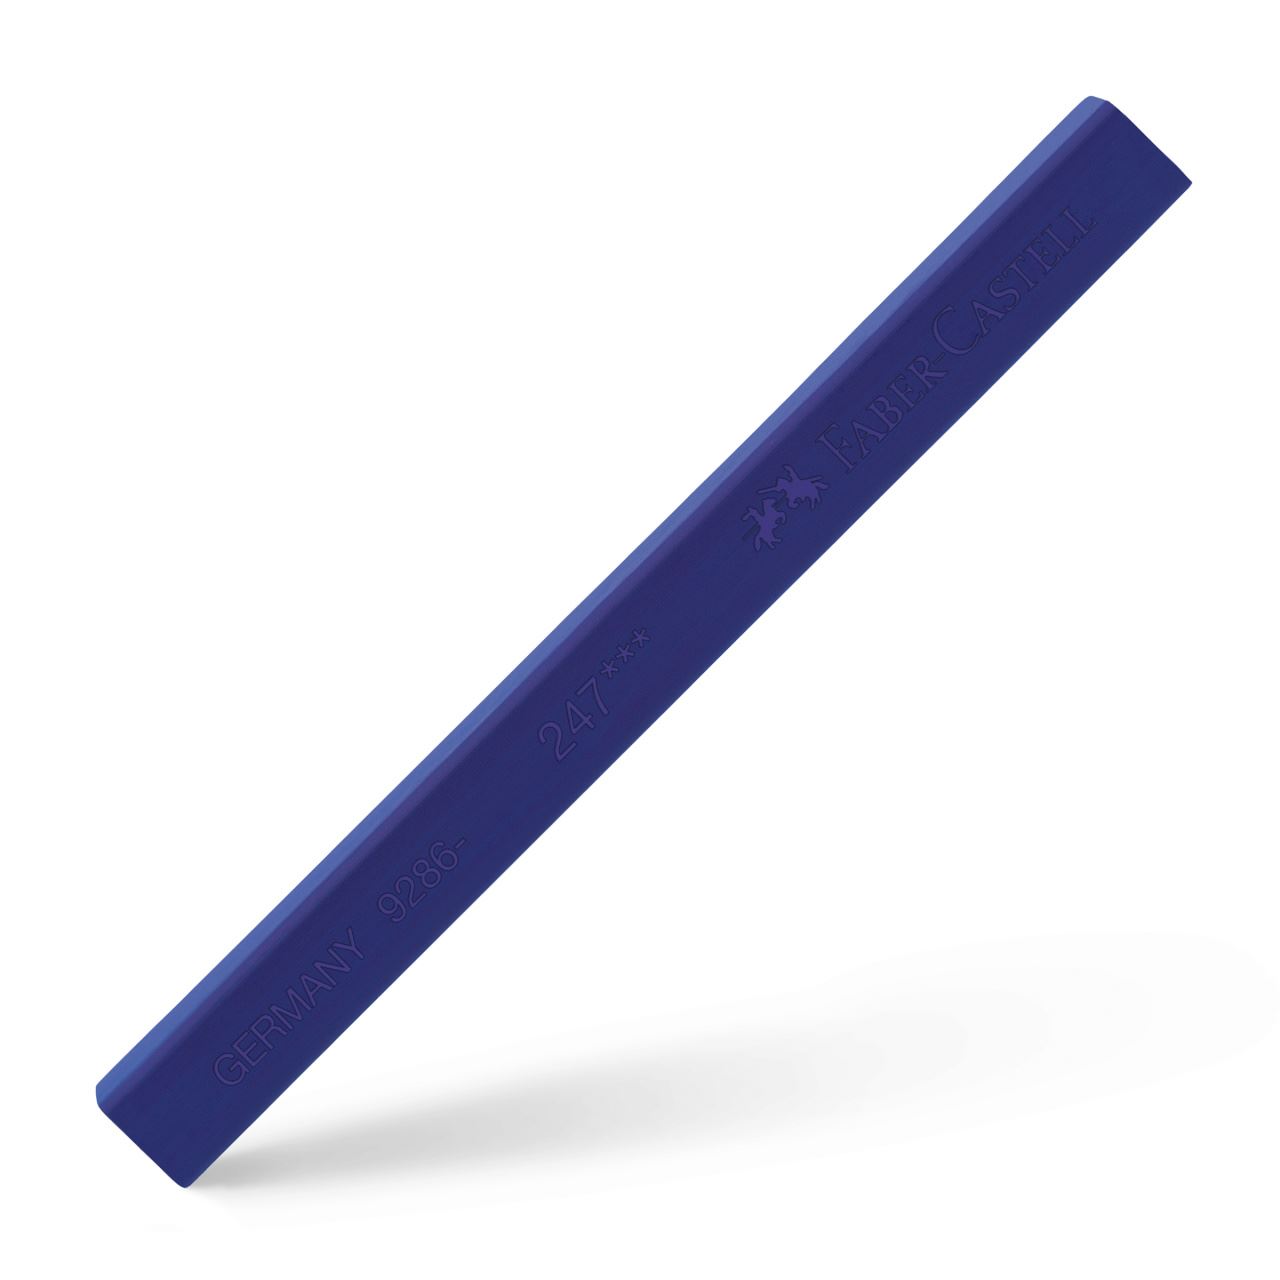 Faber-Castell - Polychromos pastel, indanthrene blue